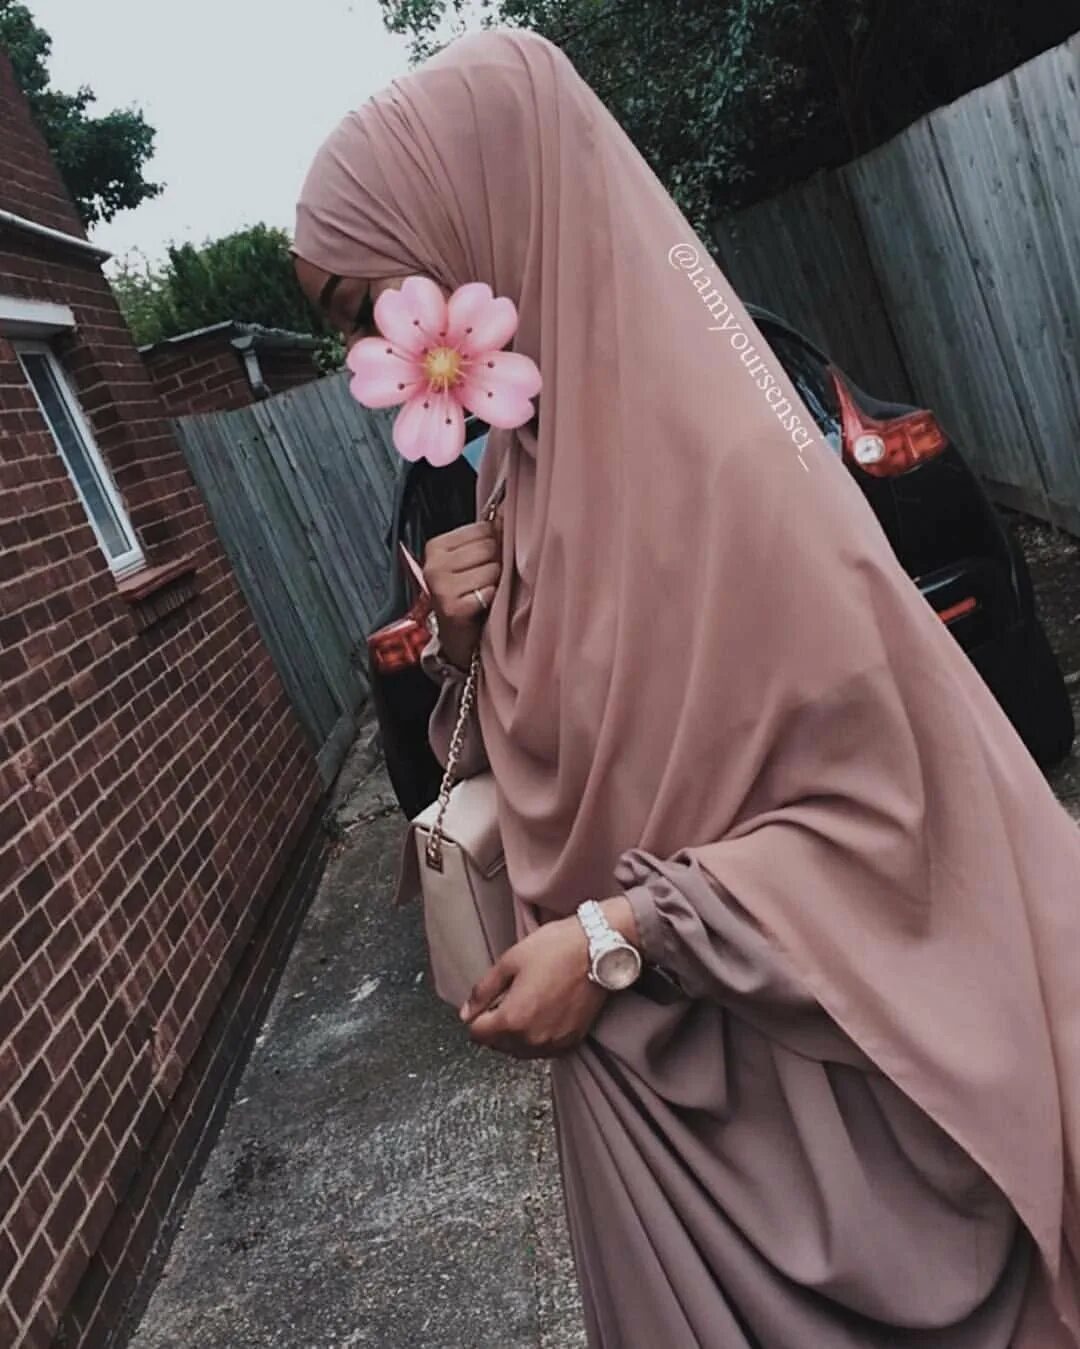 Мусульманская эстетика. Девушки в хиджабахэстэтика. Девушки в хиджабе Эстетика. Хиджаб без лица. Эстетика мусульманки.